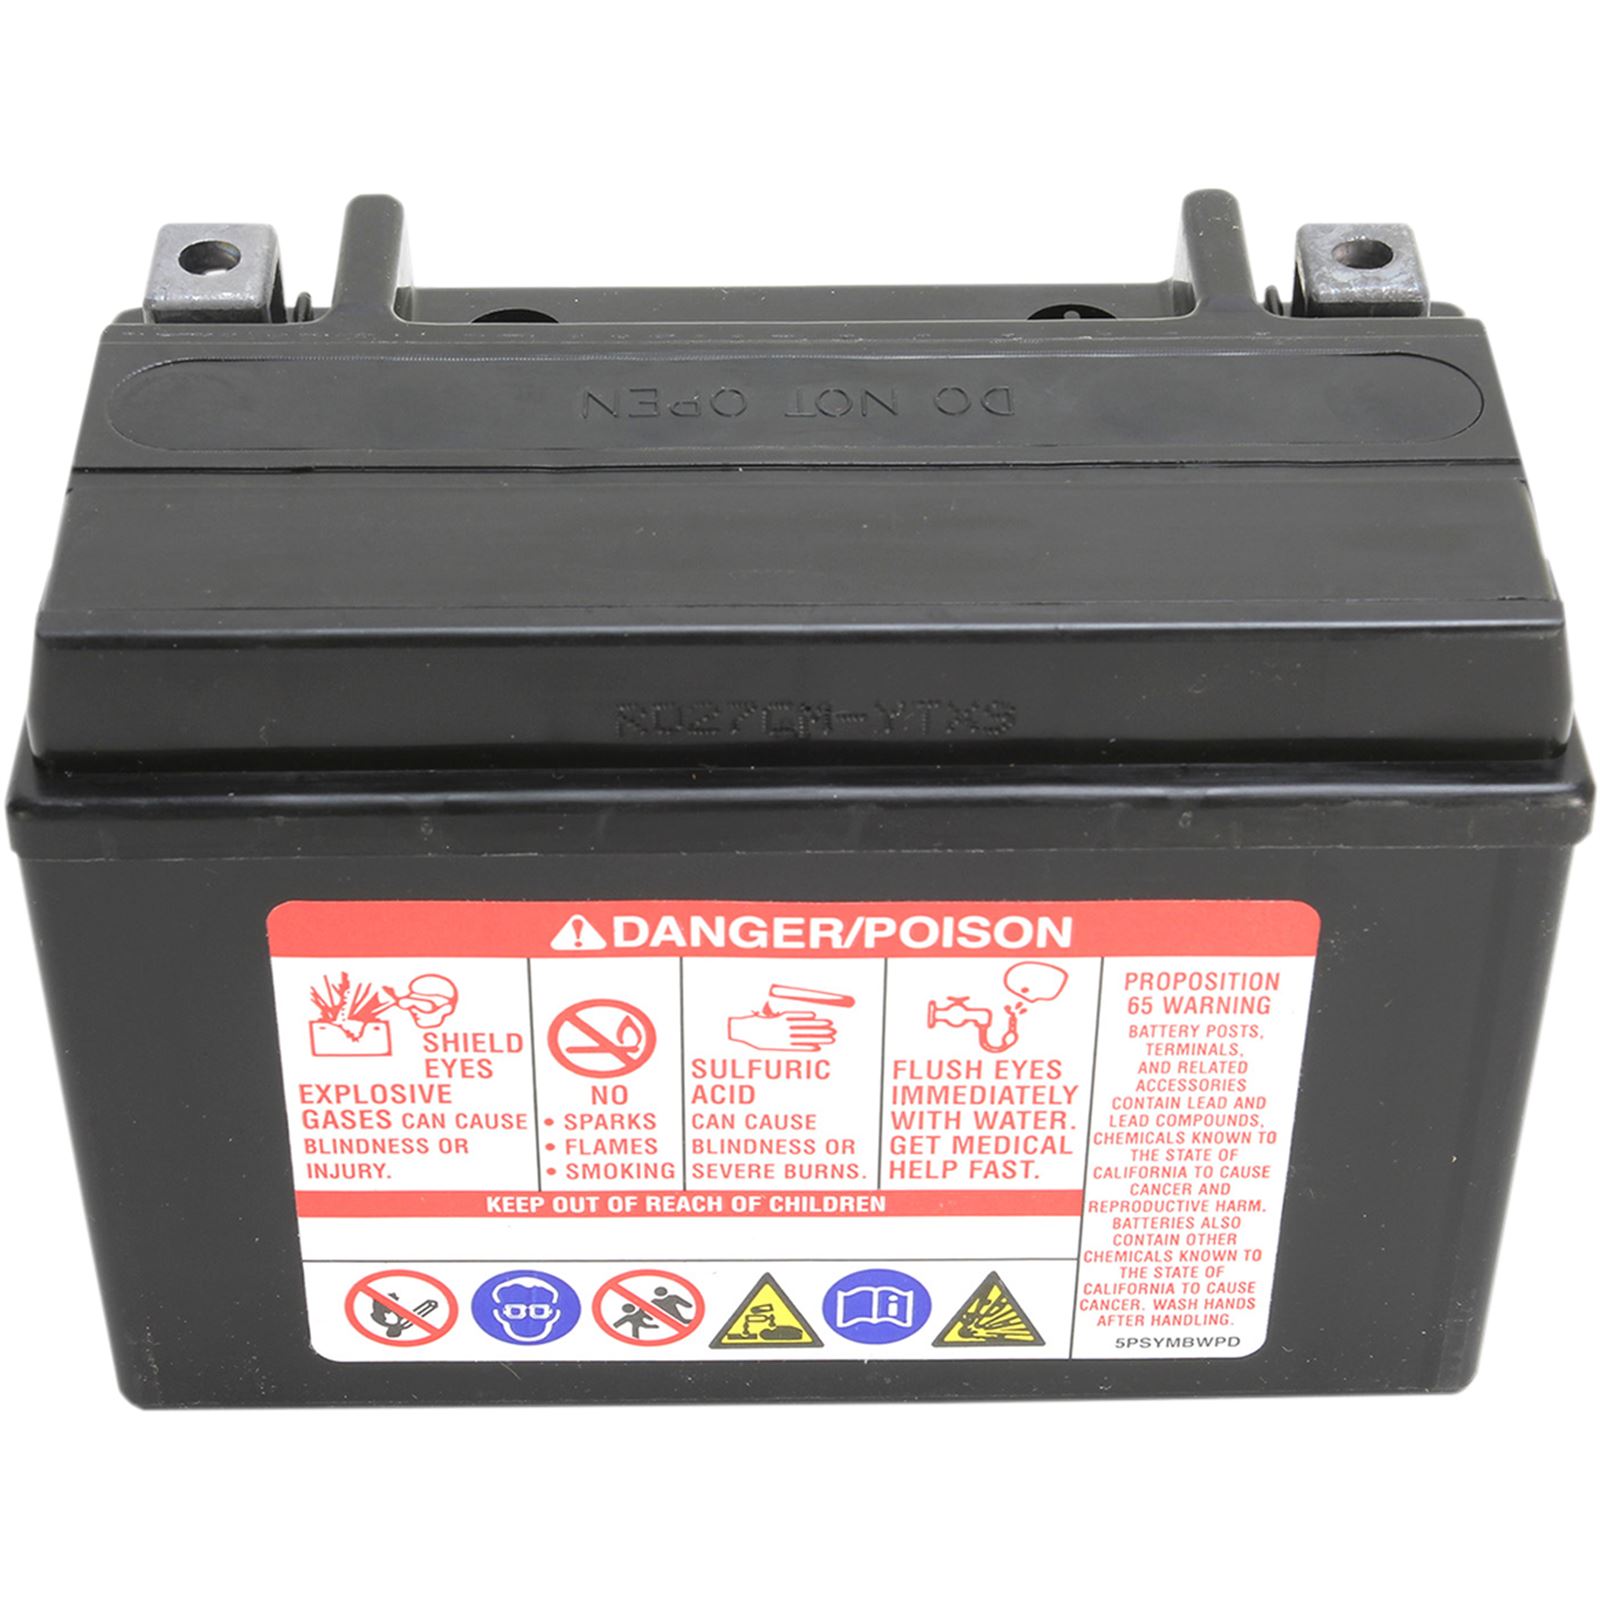 Yuasa - AGM Battery Maintenance Free (YTX9-BS)